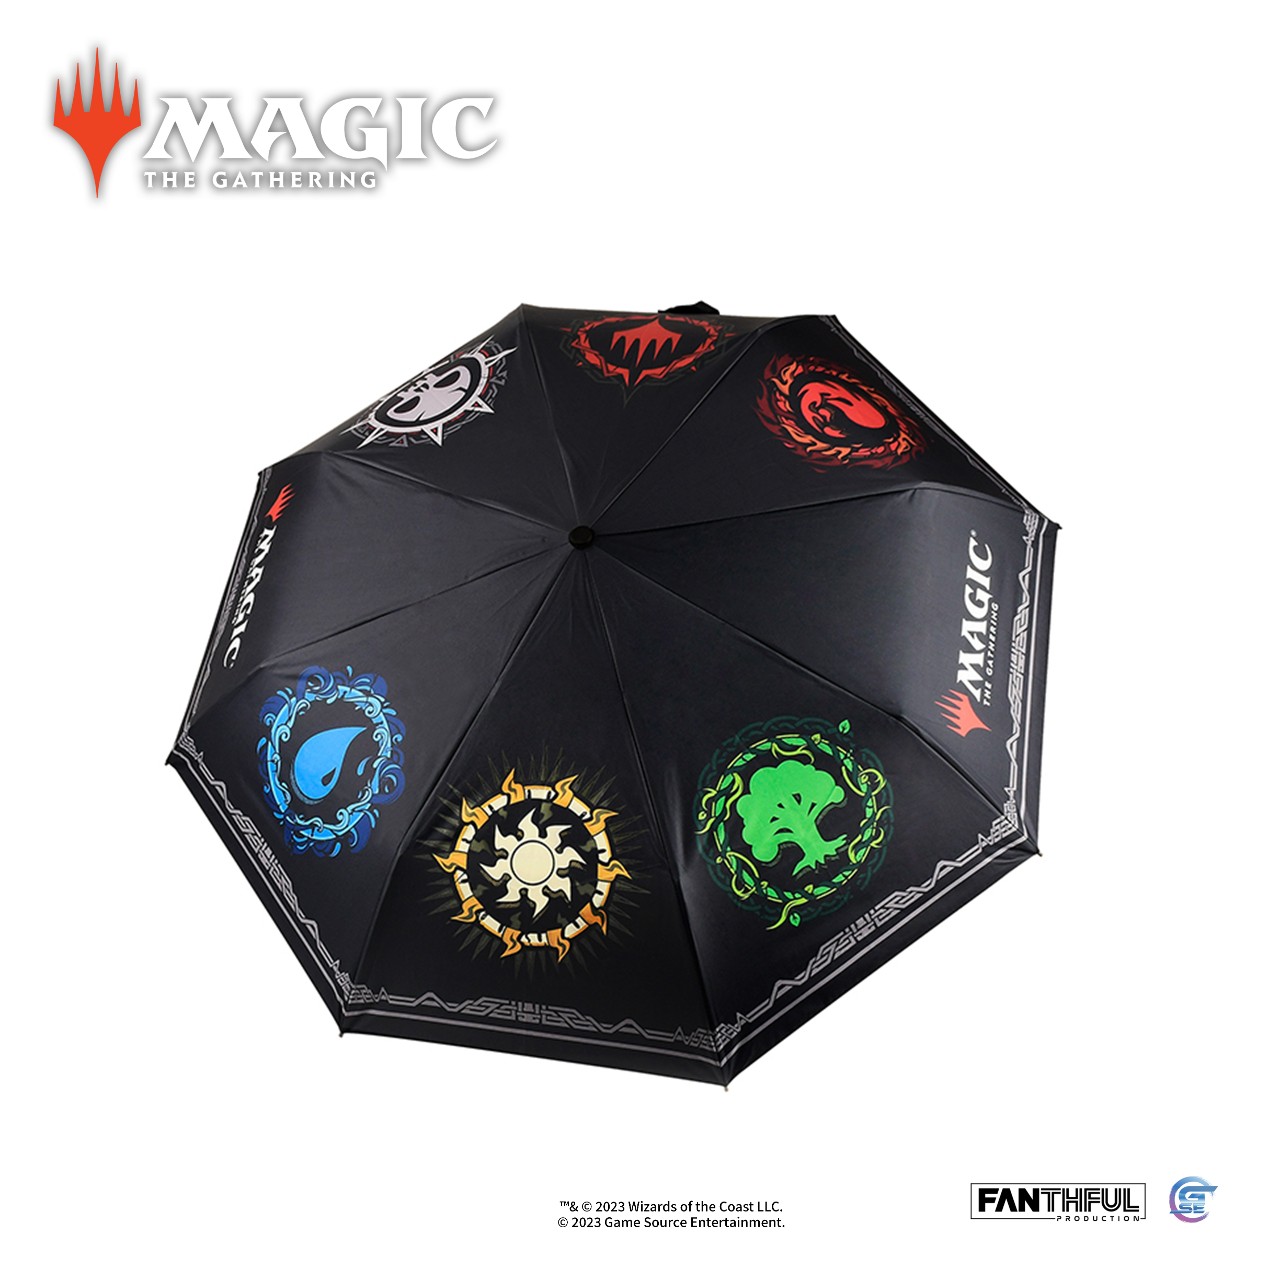 Magic The Gathering_product shot_umbrella_01